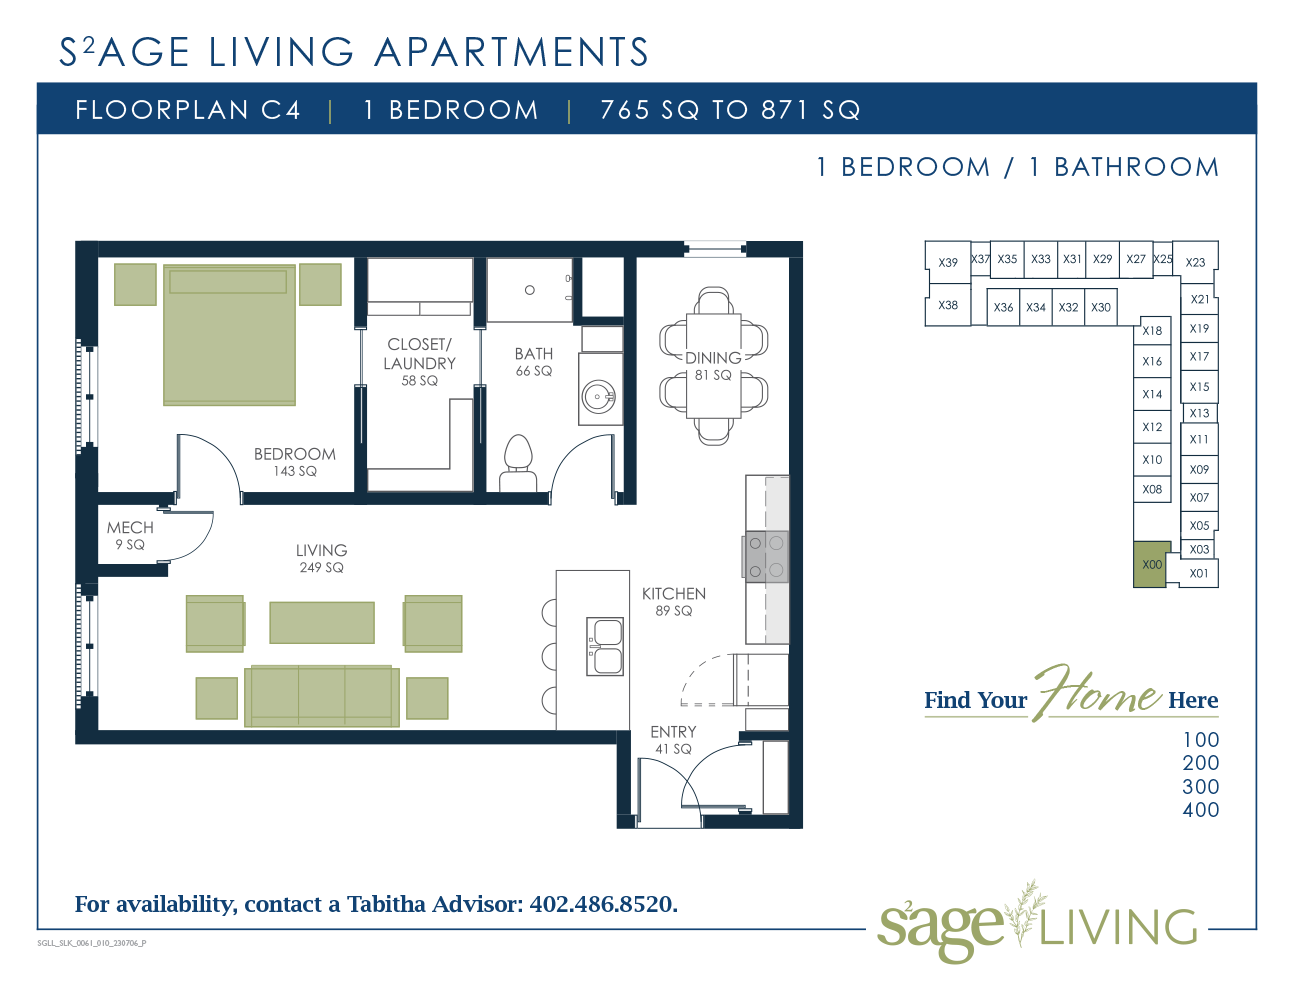 S2age Living Floor Plan, Apartment C4